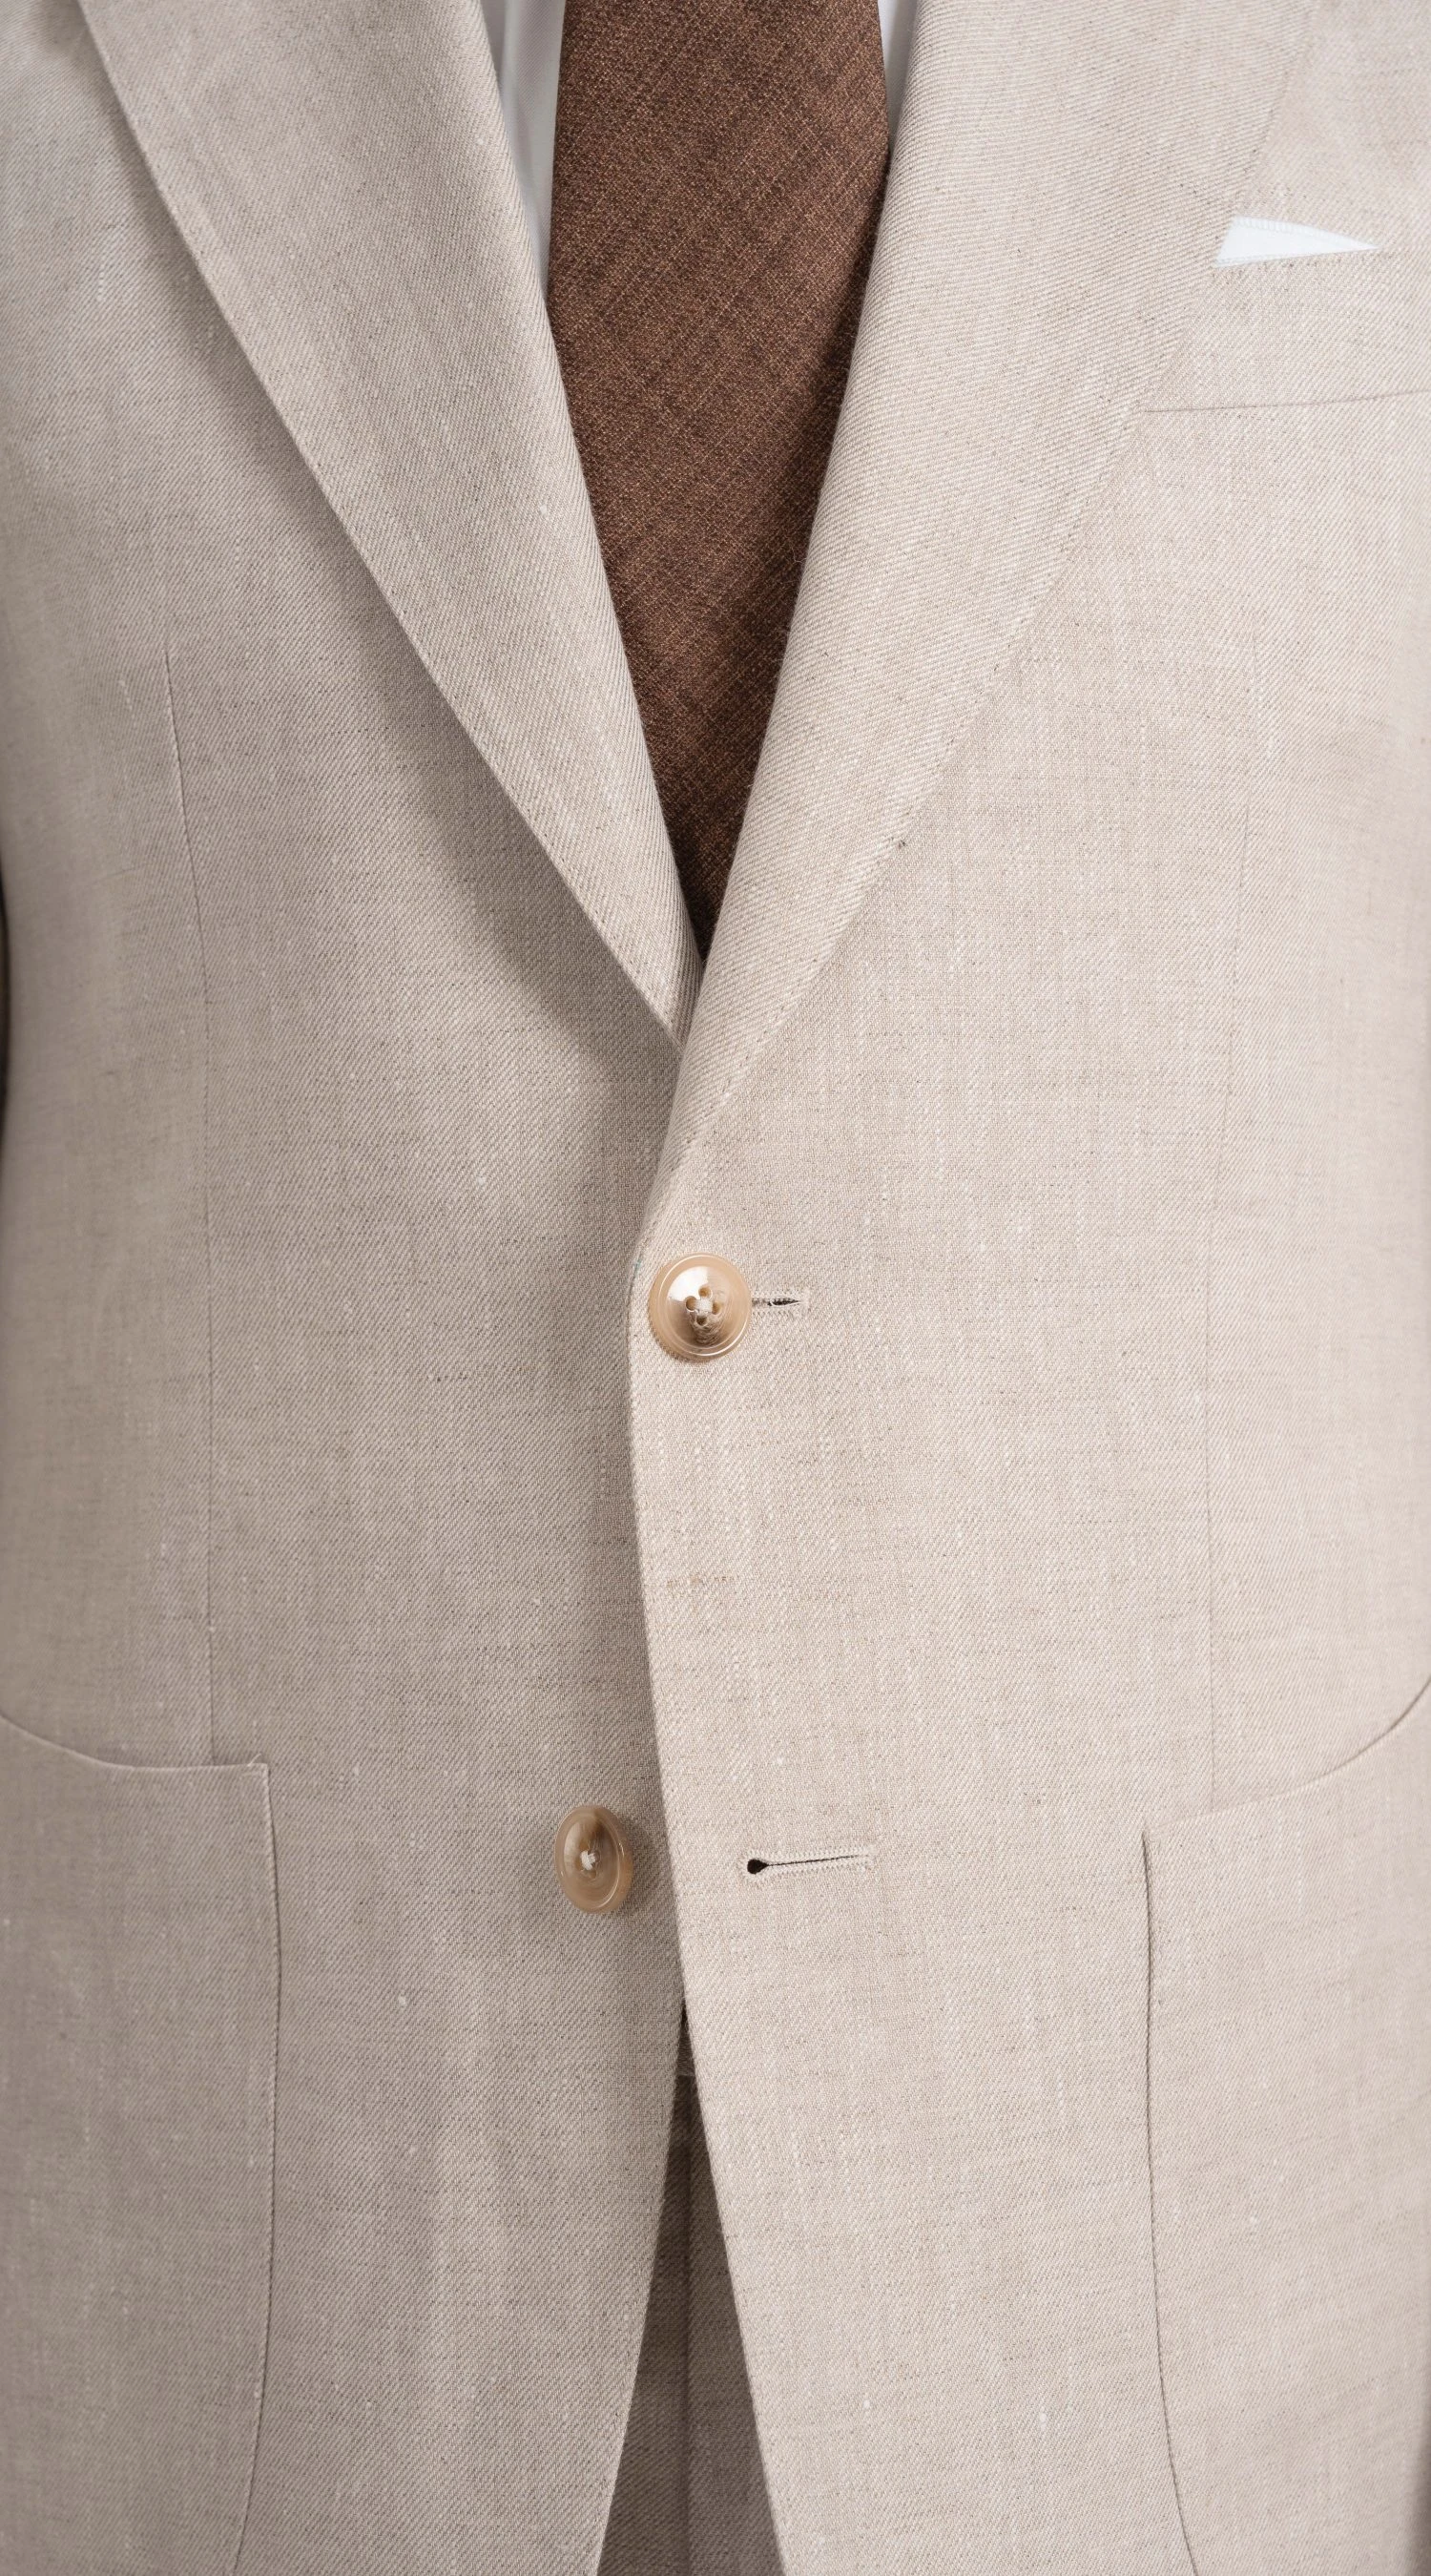 mond custom made irish linen suit in natural beige